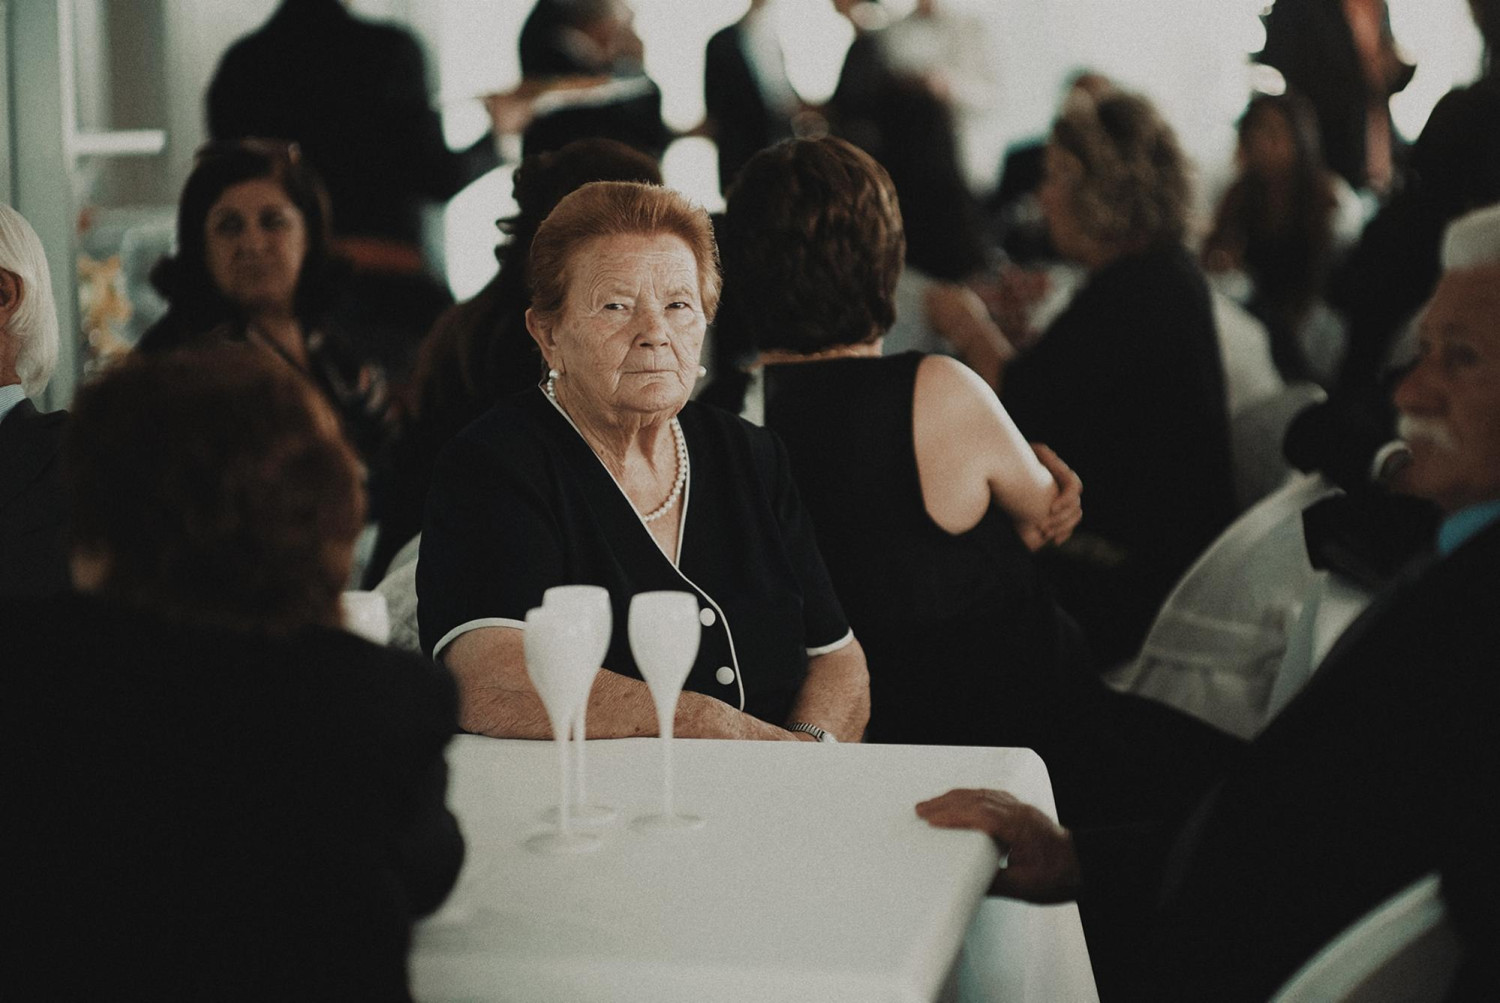 Older lady dressed in black at social function - Focus Care